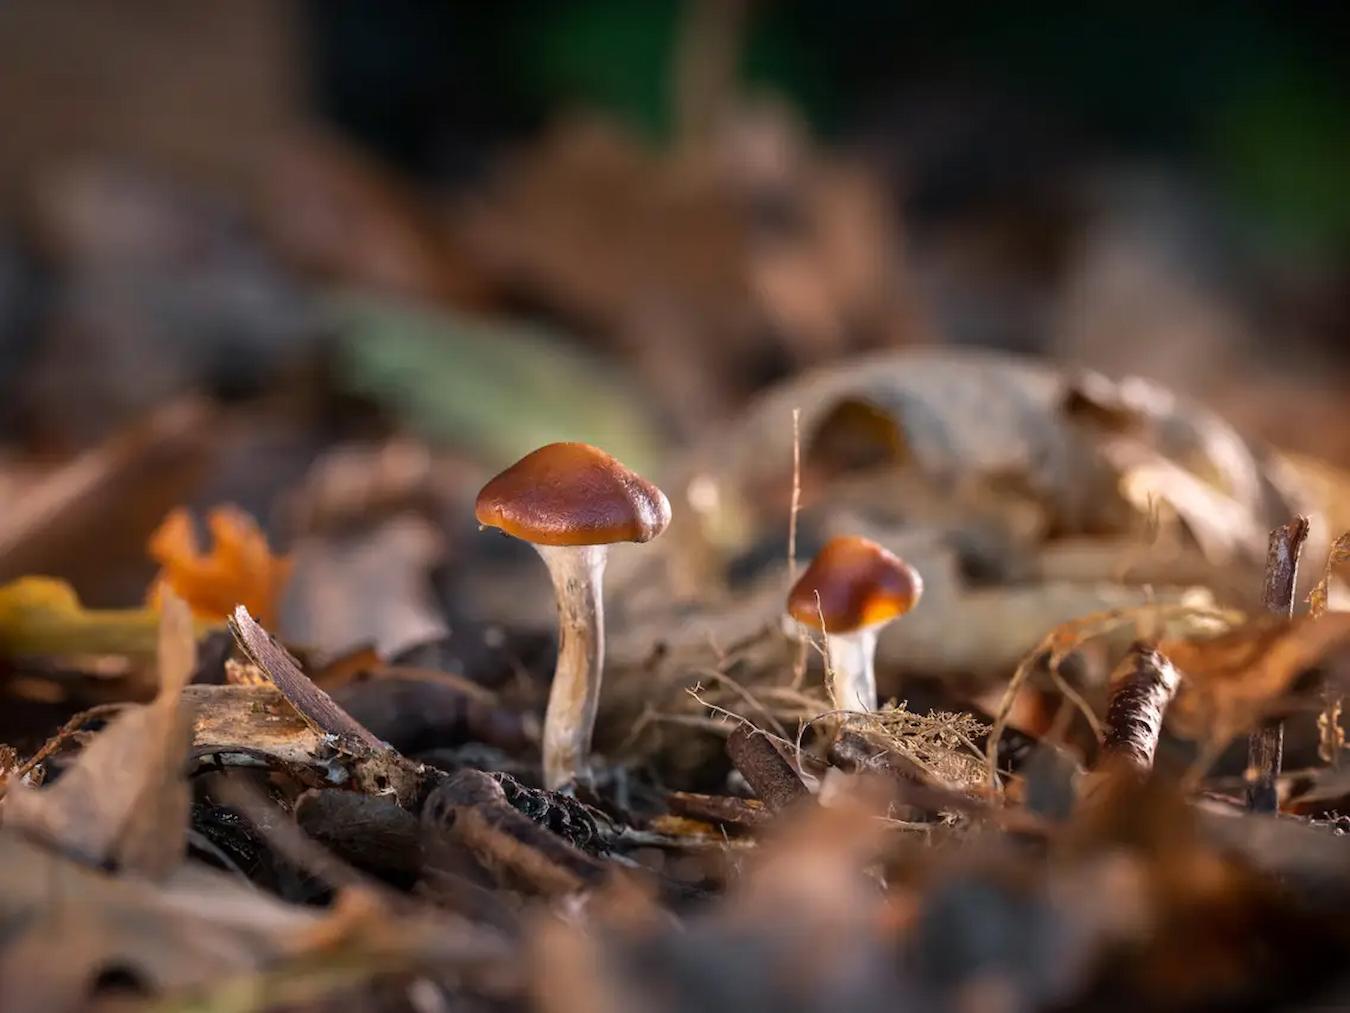 mushrooms growing in the ground shroom addiction urine tests magic mushroom trip taking mushrooms specific tests hallucinations shrooms produce